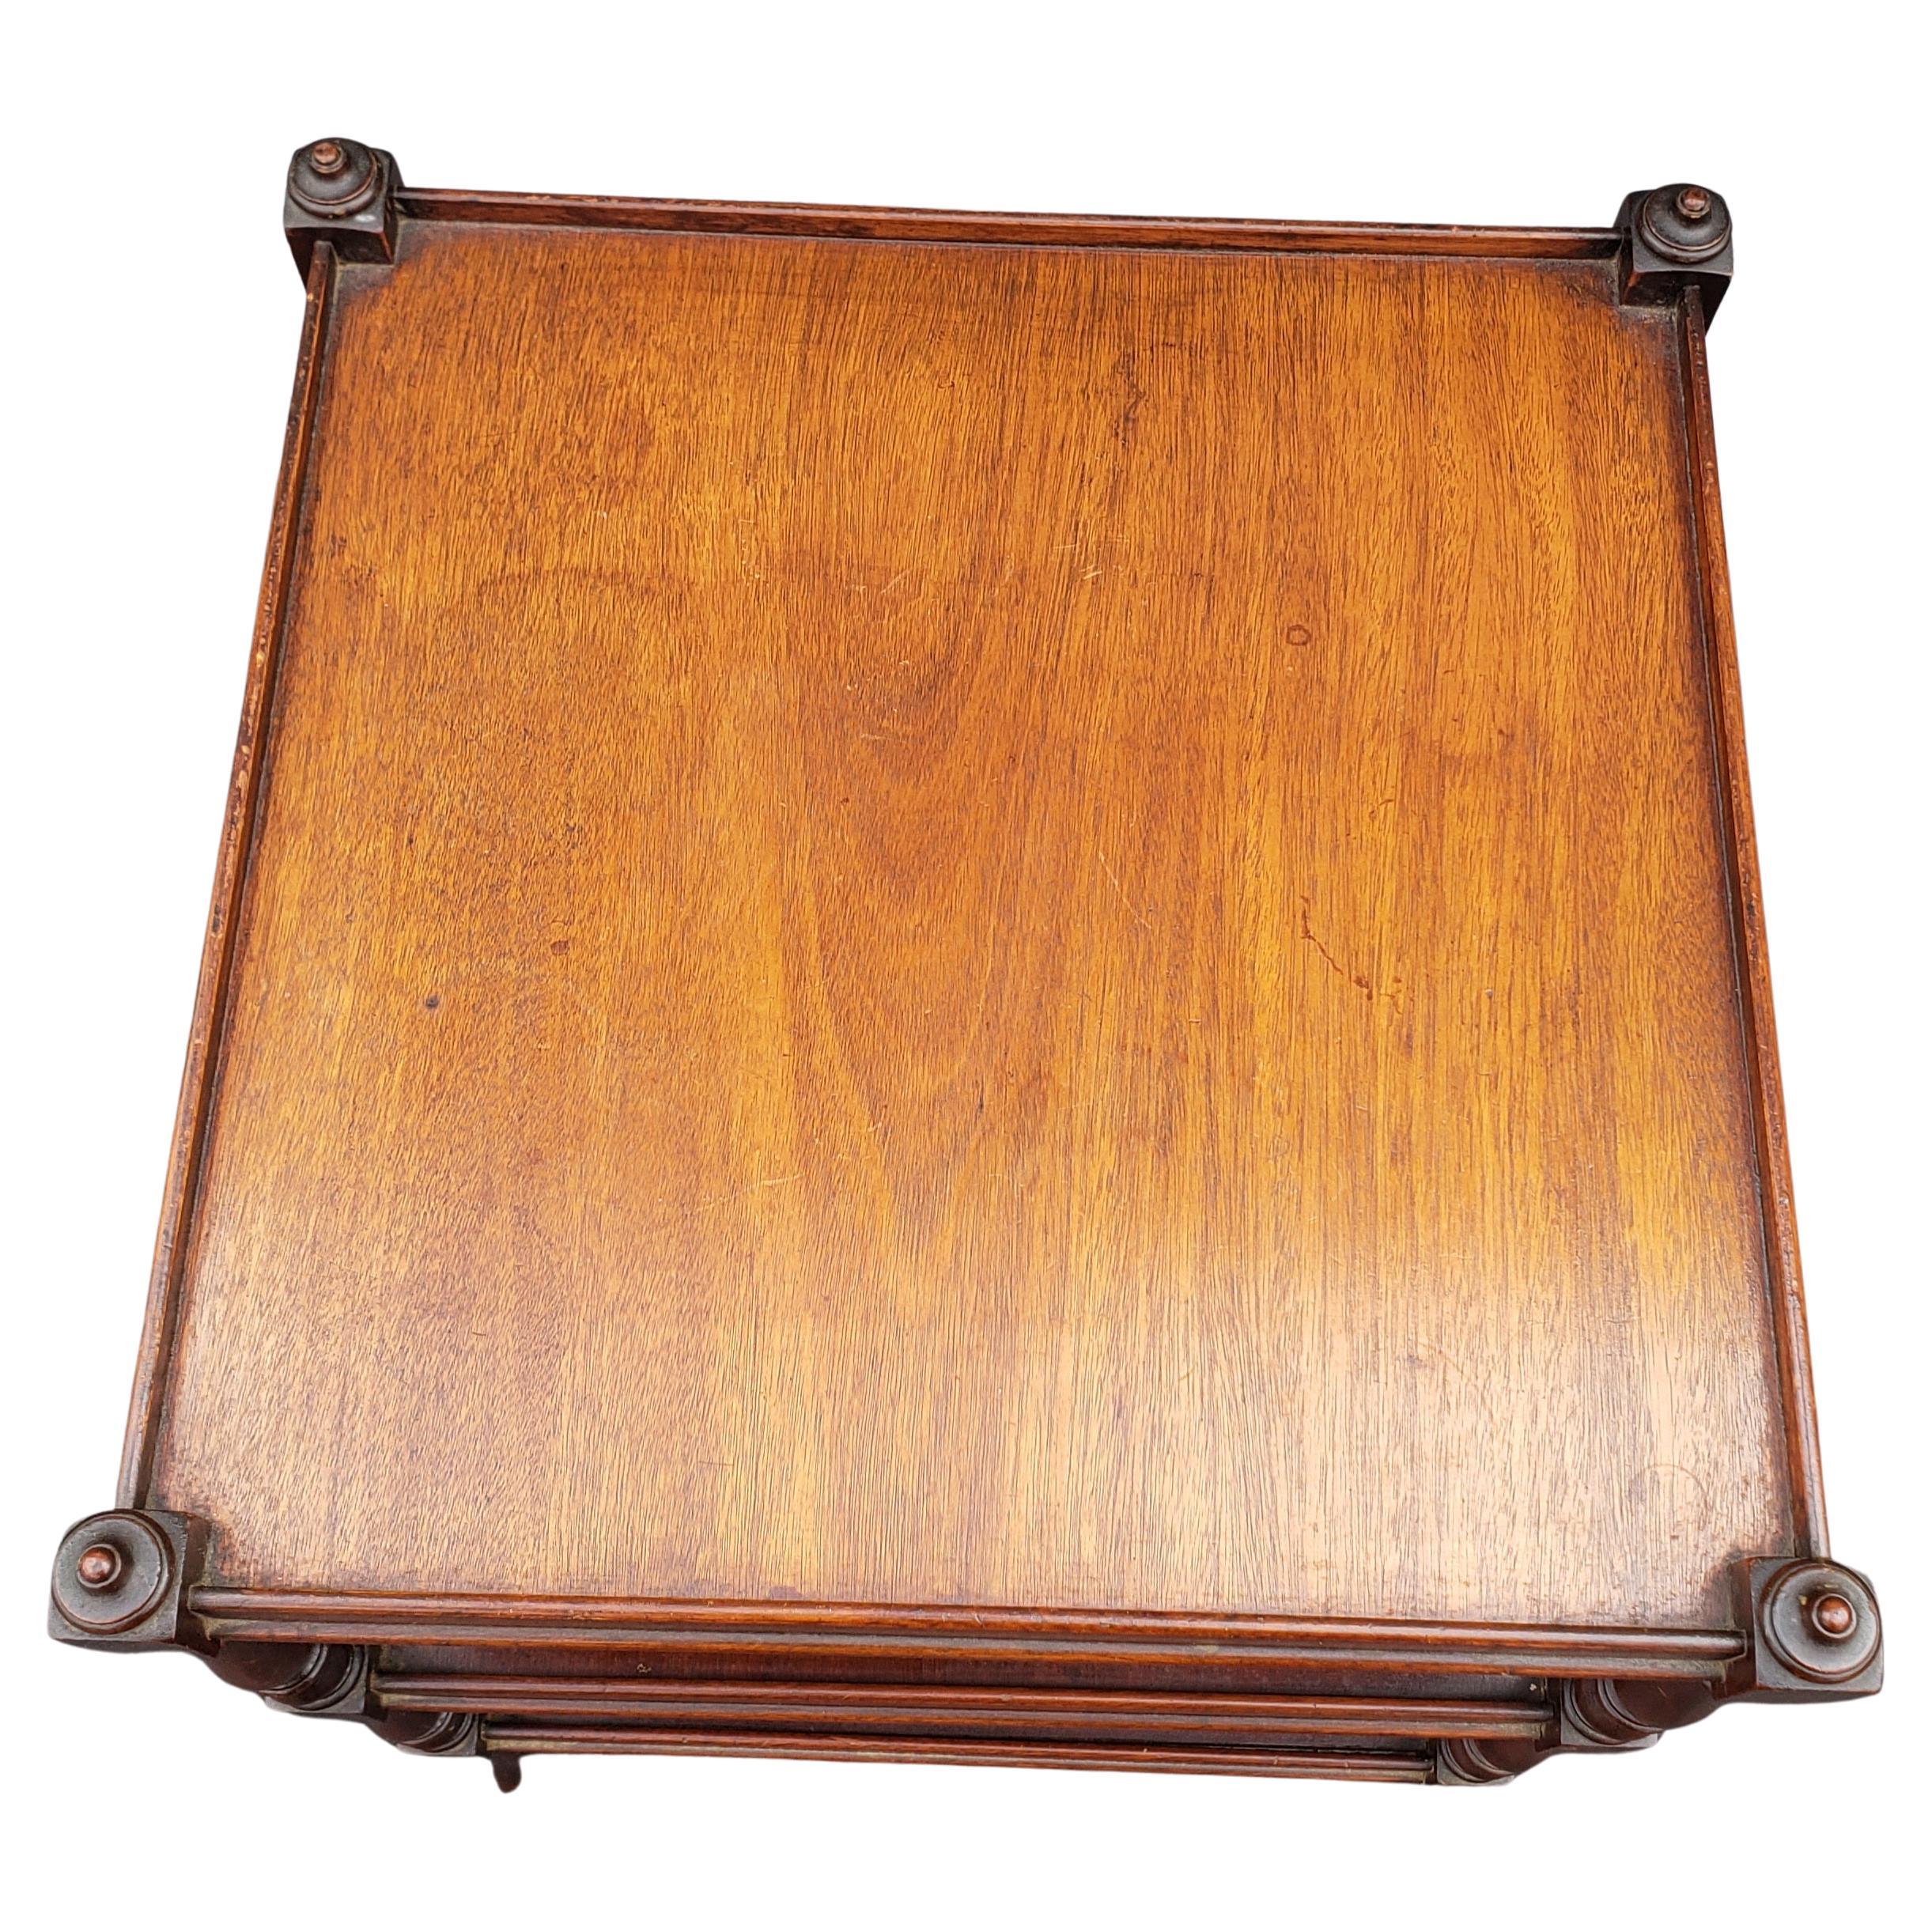 Regency Style mahogany three tier side table. Measures 18